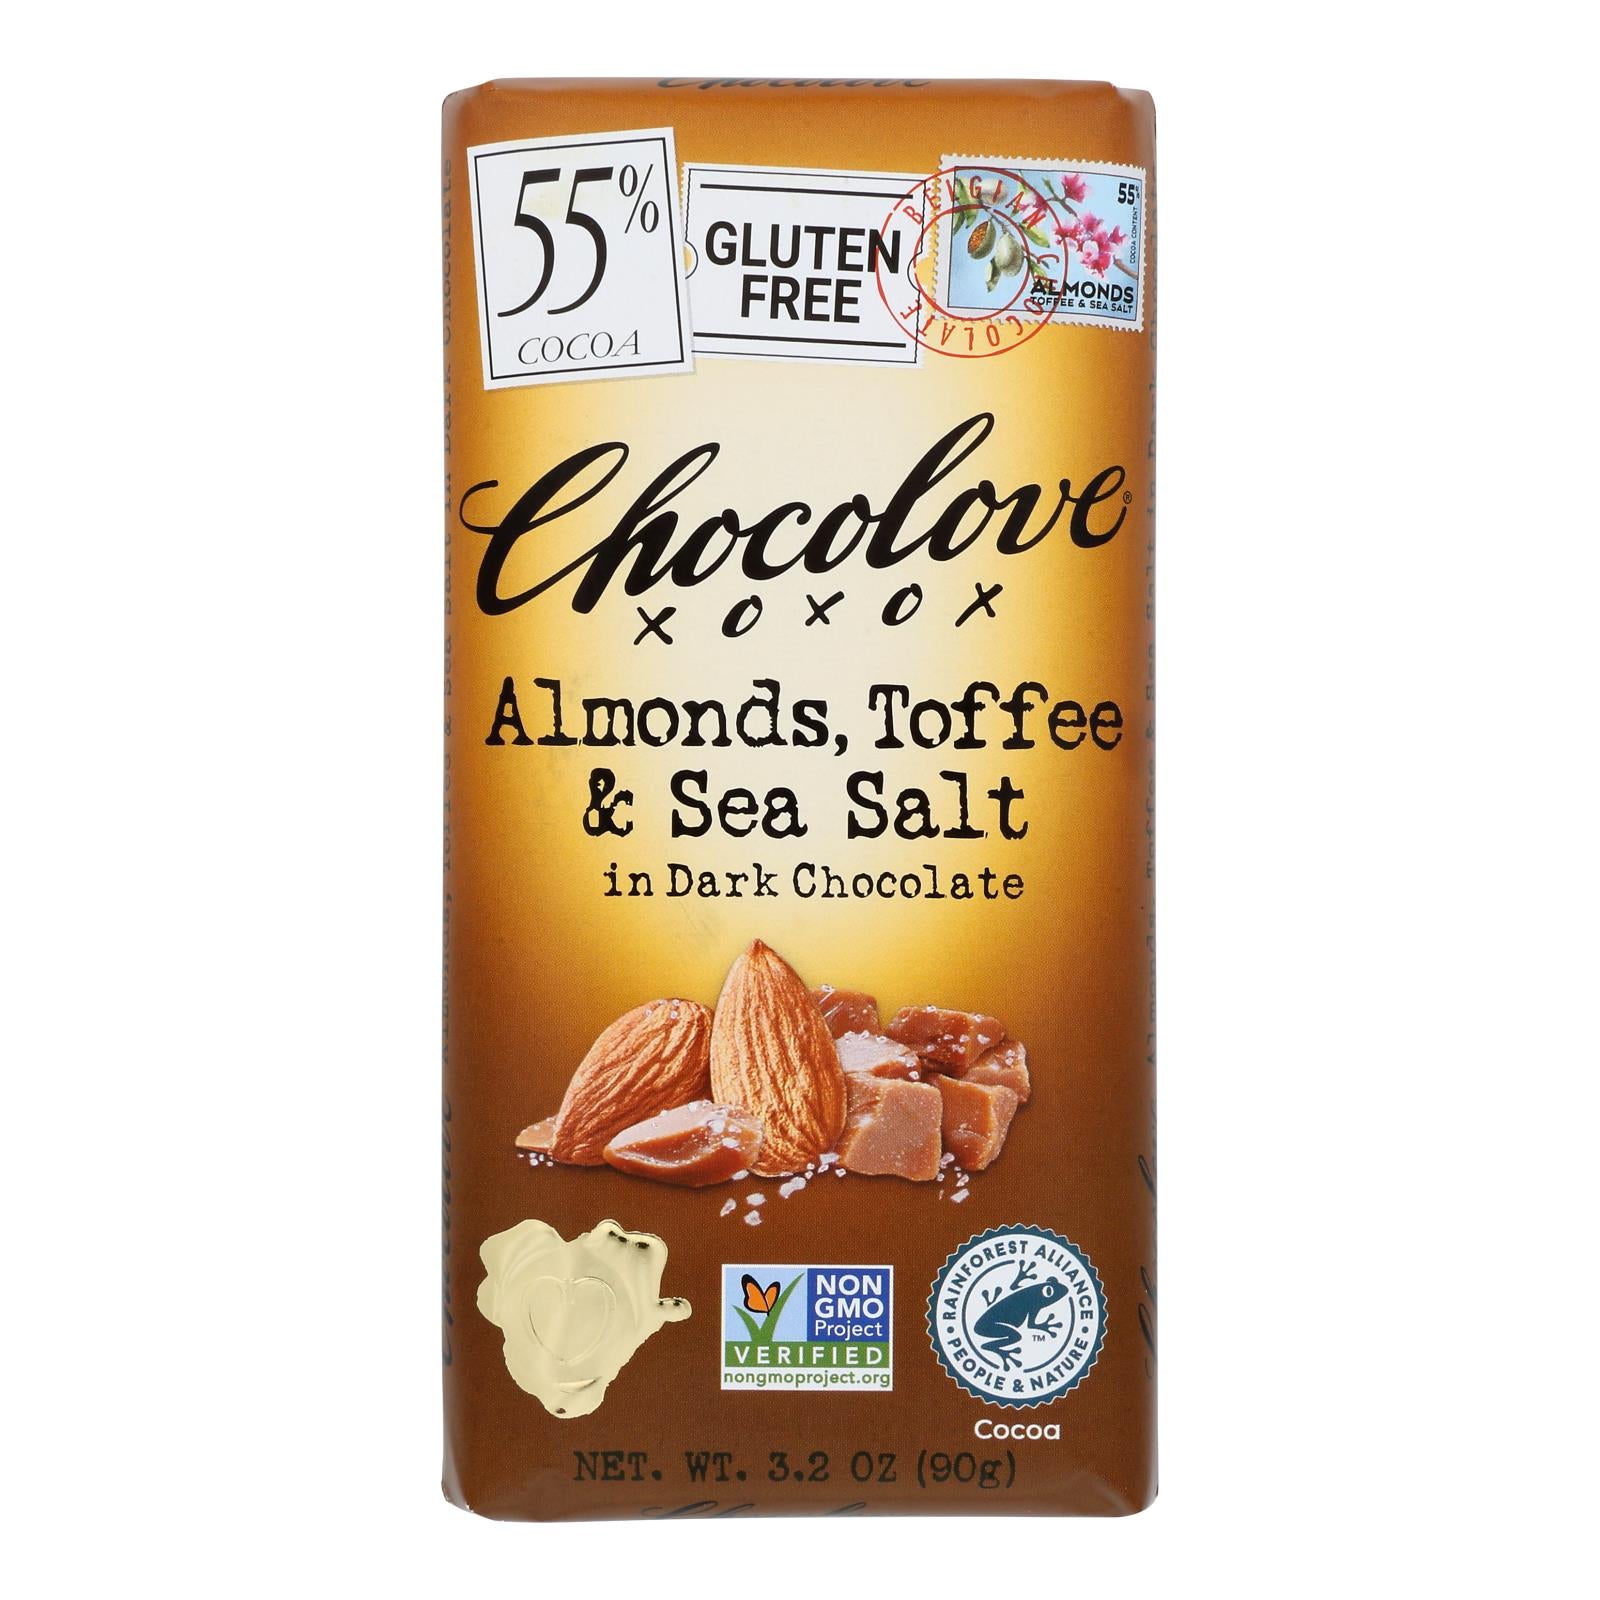 Chocolove Xoxox - Bar - Almond - Toffe - Sea Salt - Dark Chocolate - Case of 12 - 3.2 oz